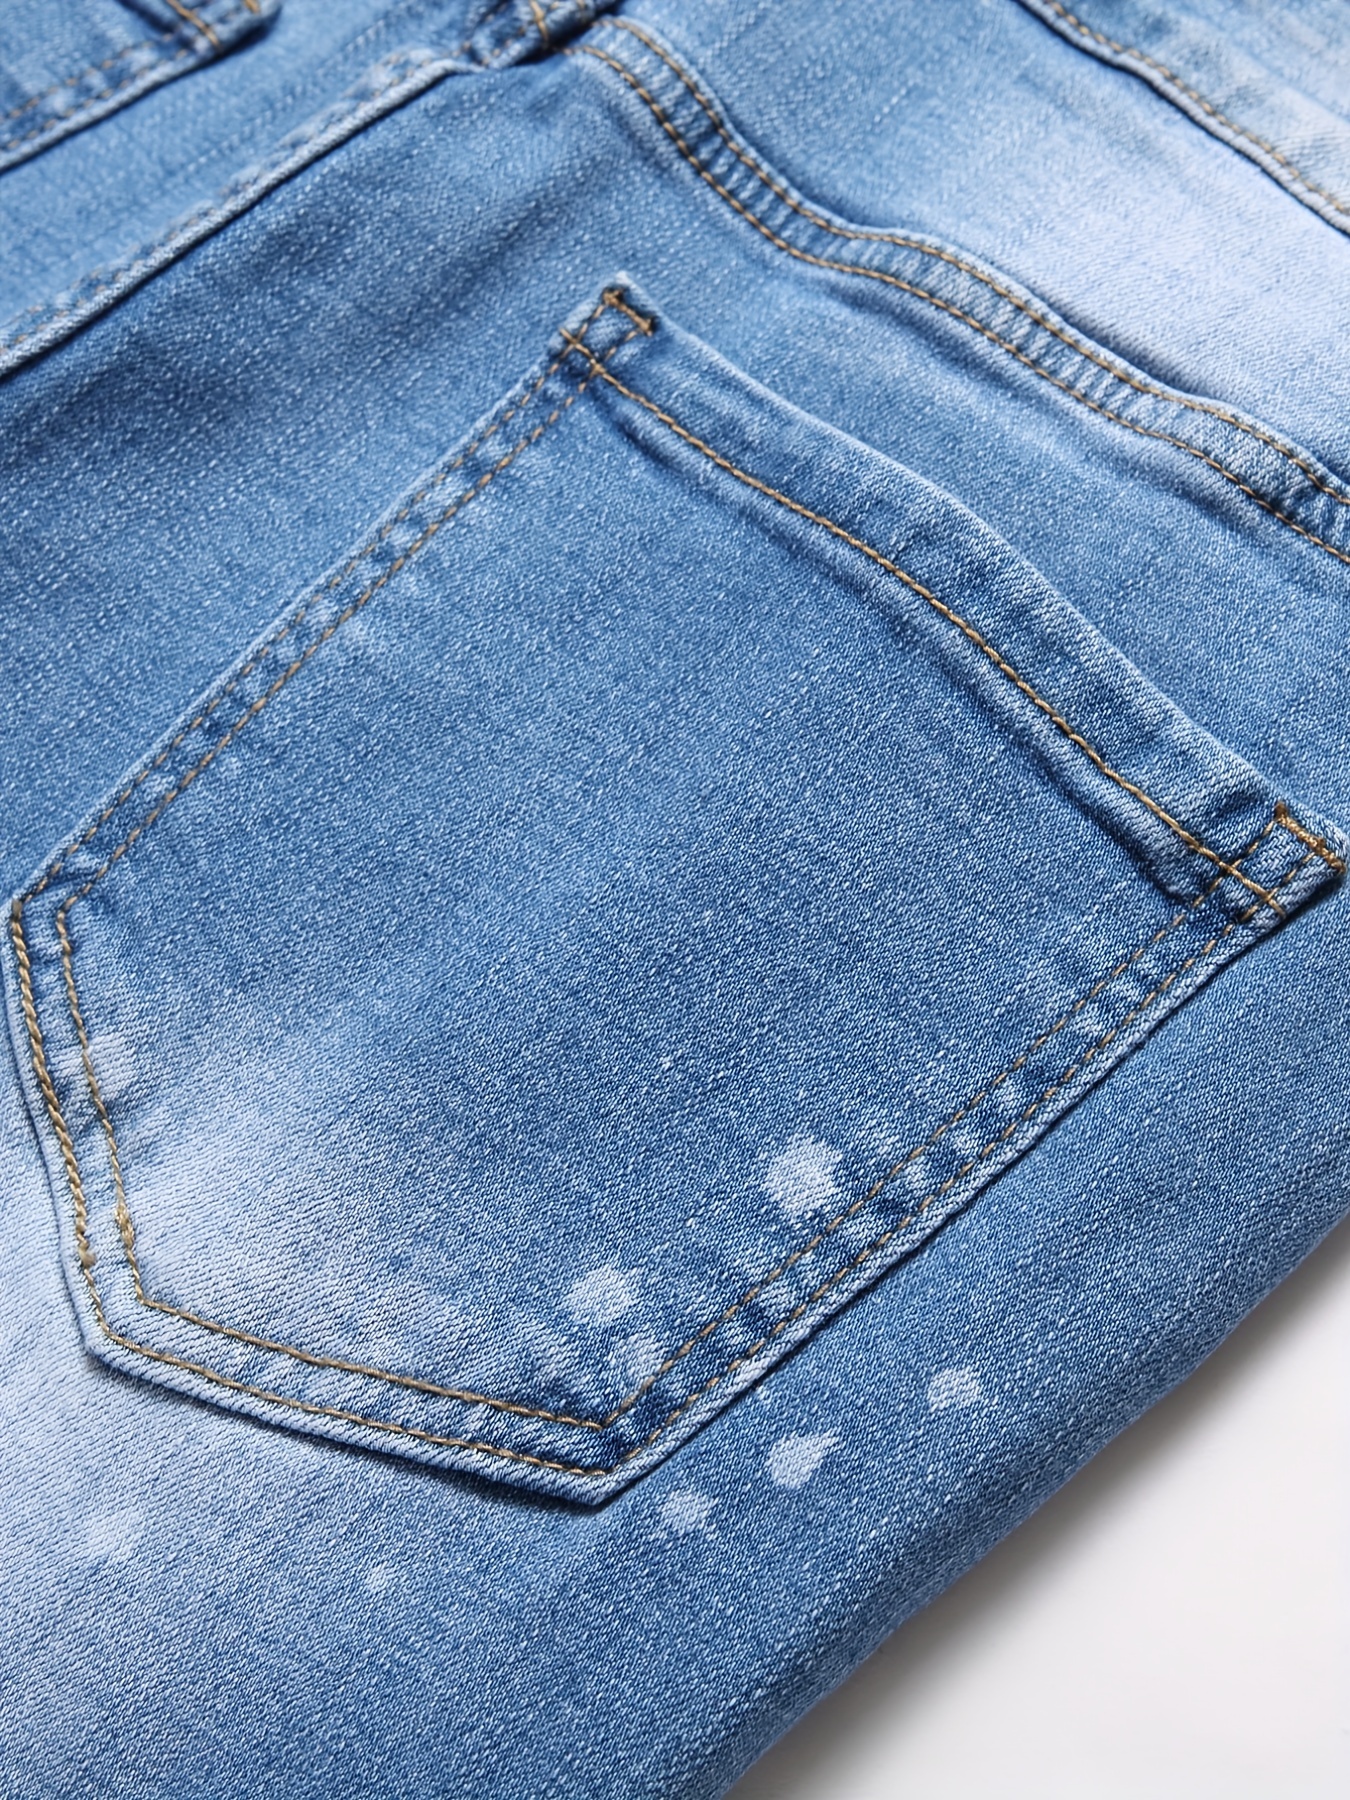 Men's Jeans - Denim Clothing